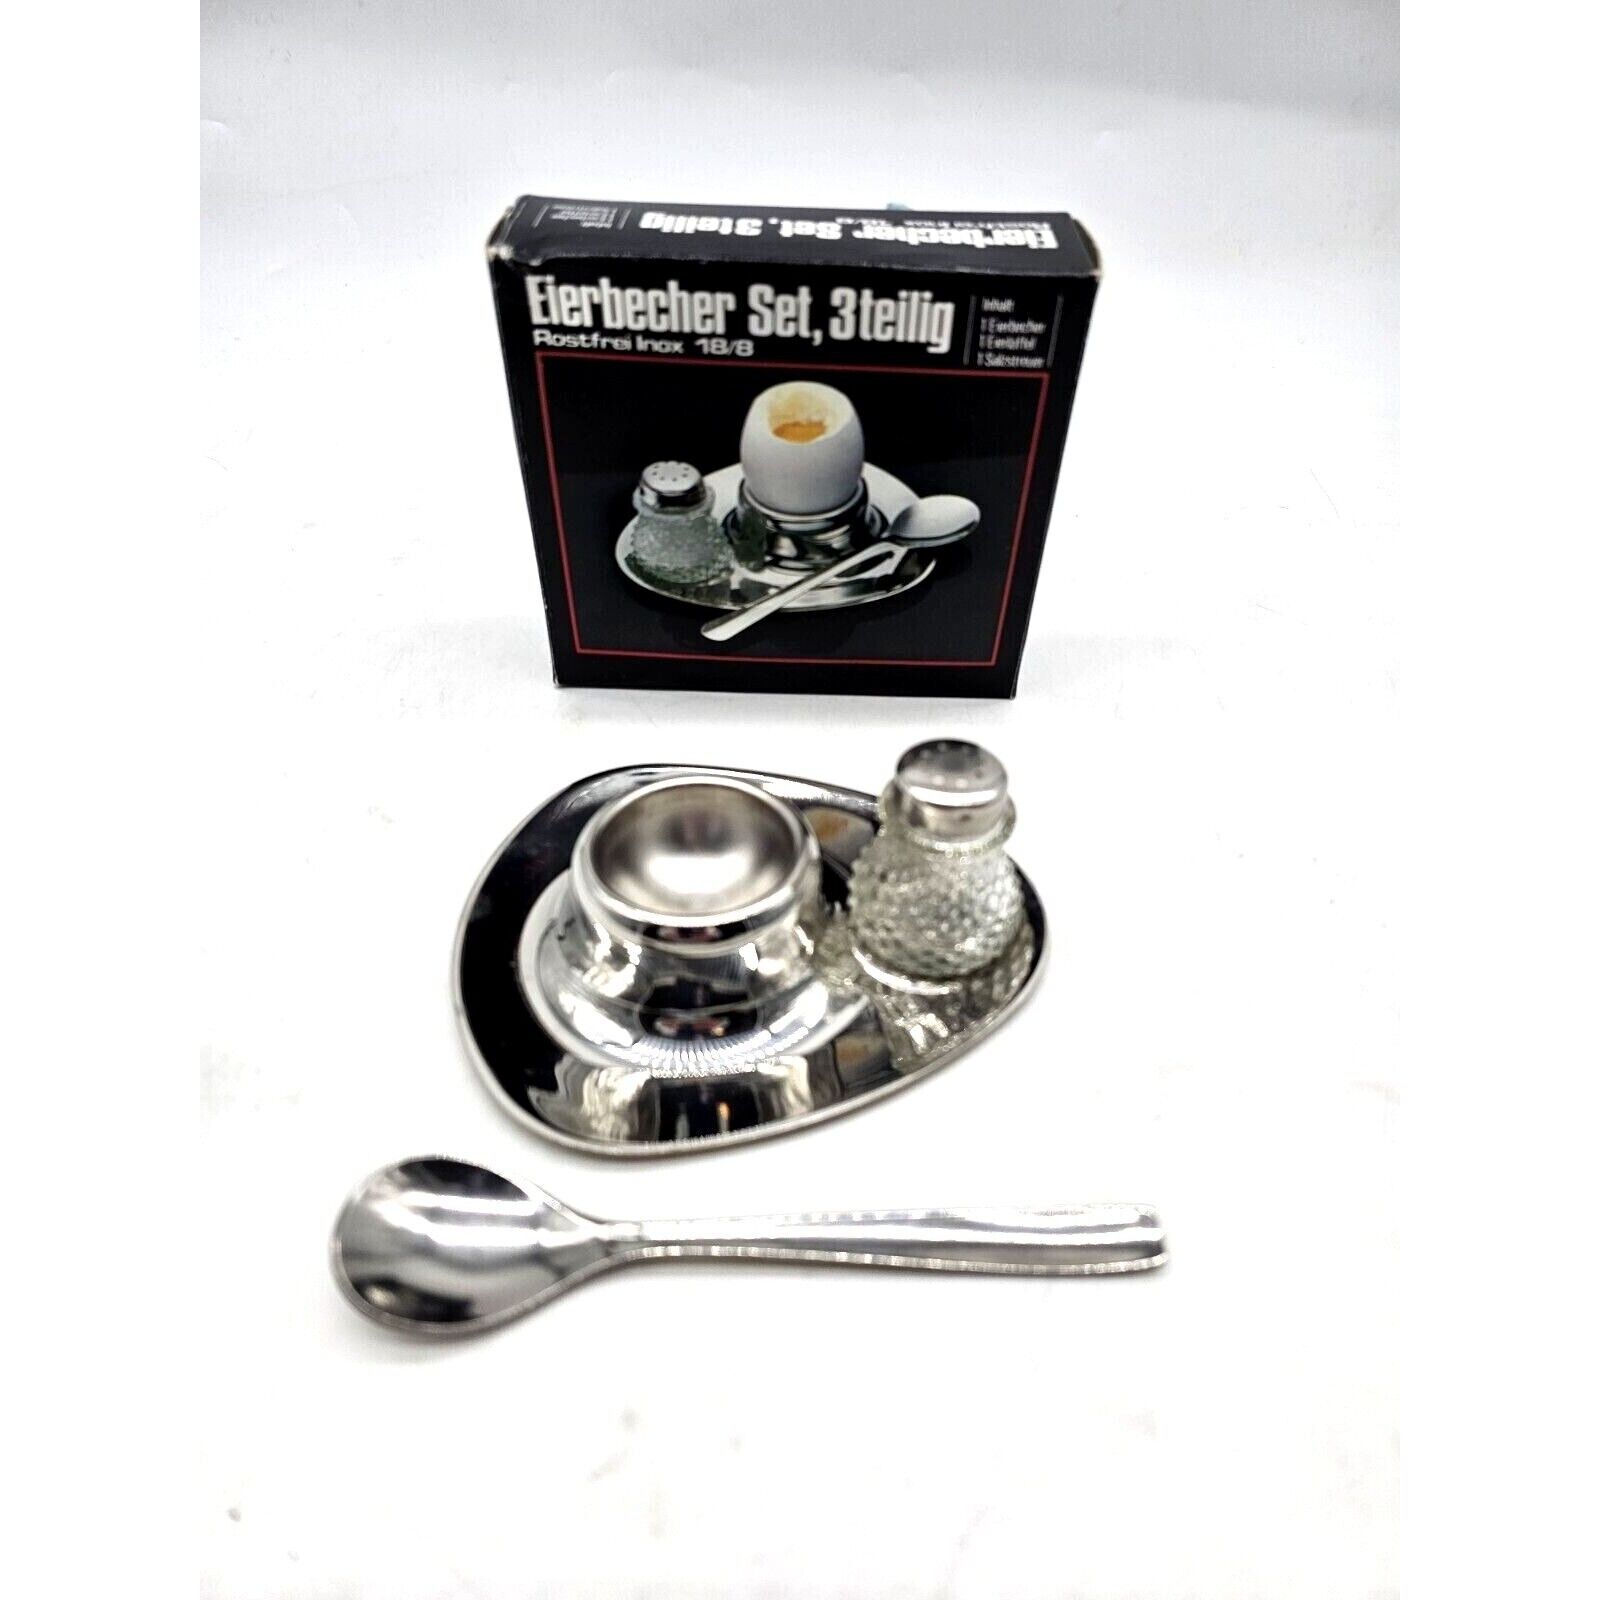 Eierbech Rostfros Inox Stainless Steel Egg Cup Holder Set Salt Shaker/Spoon